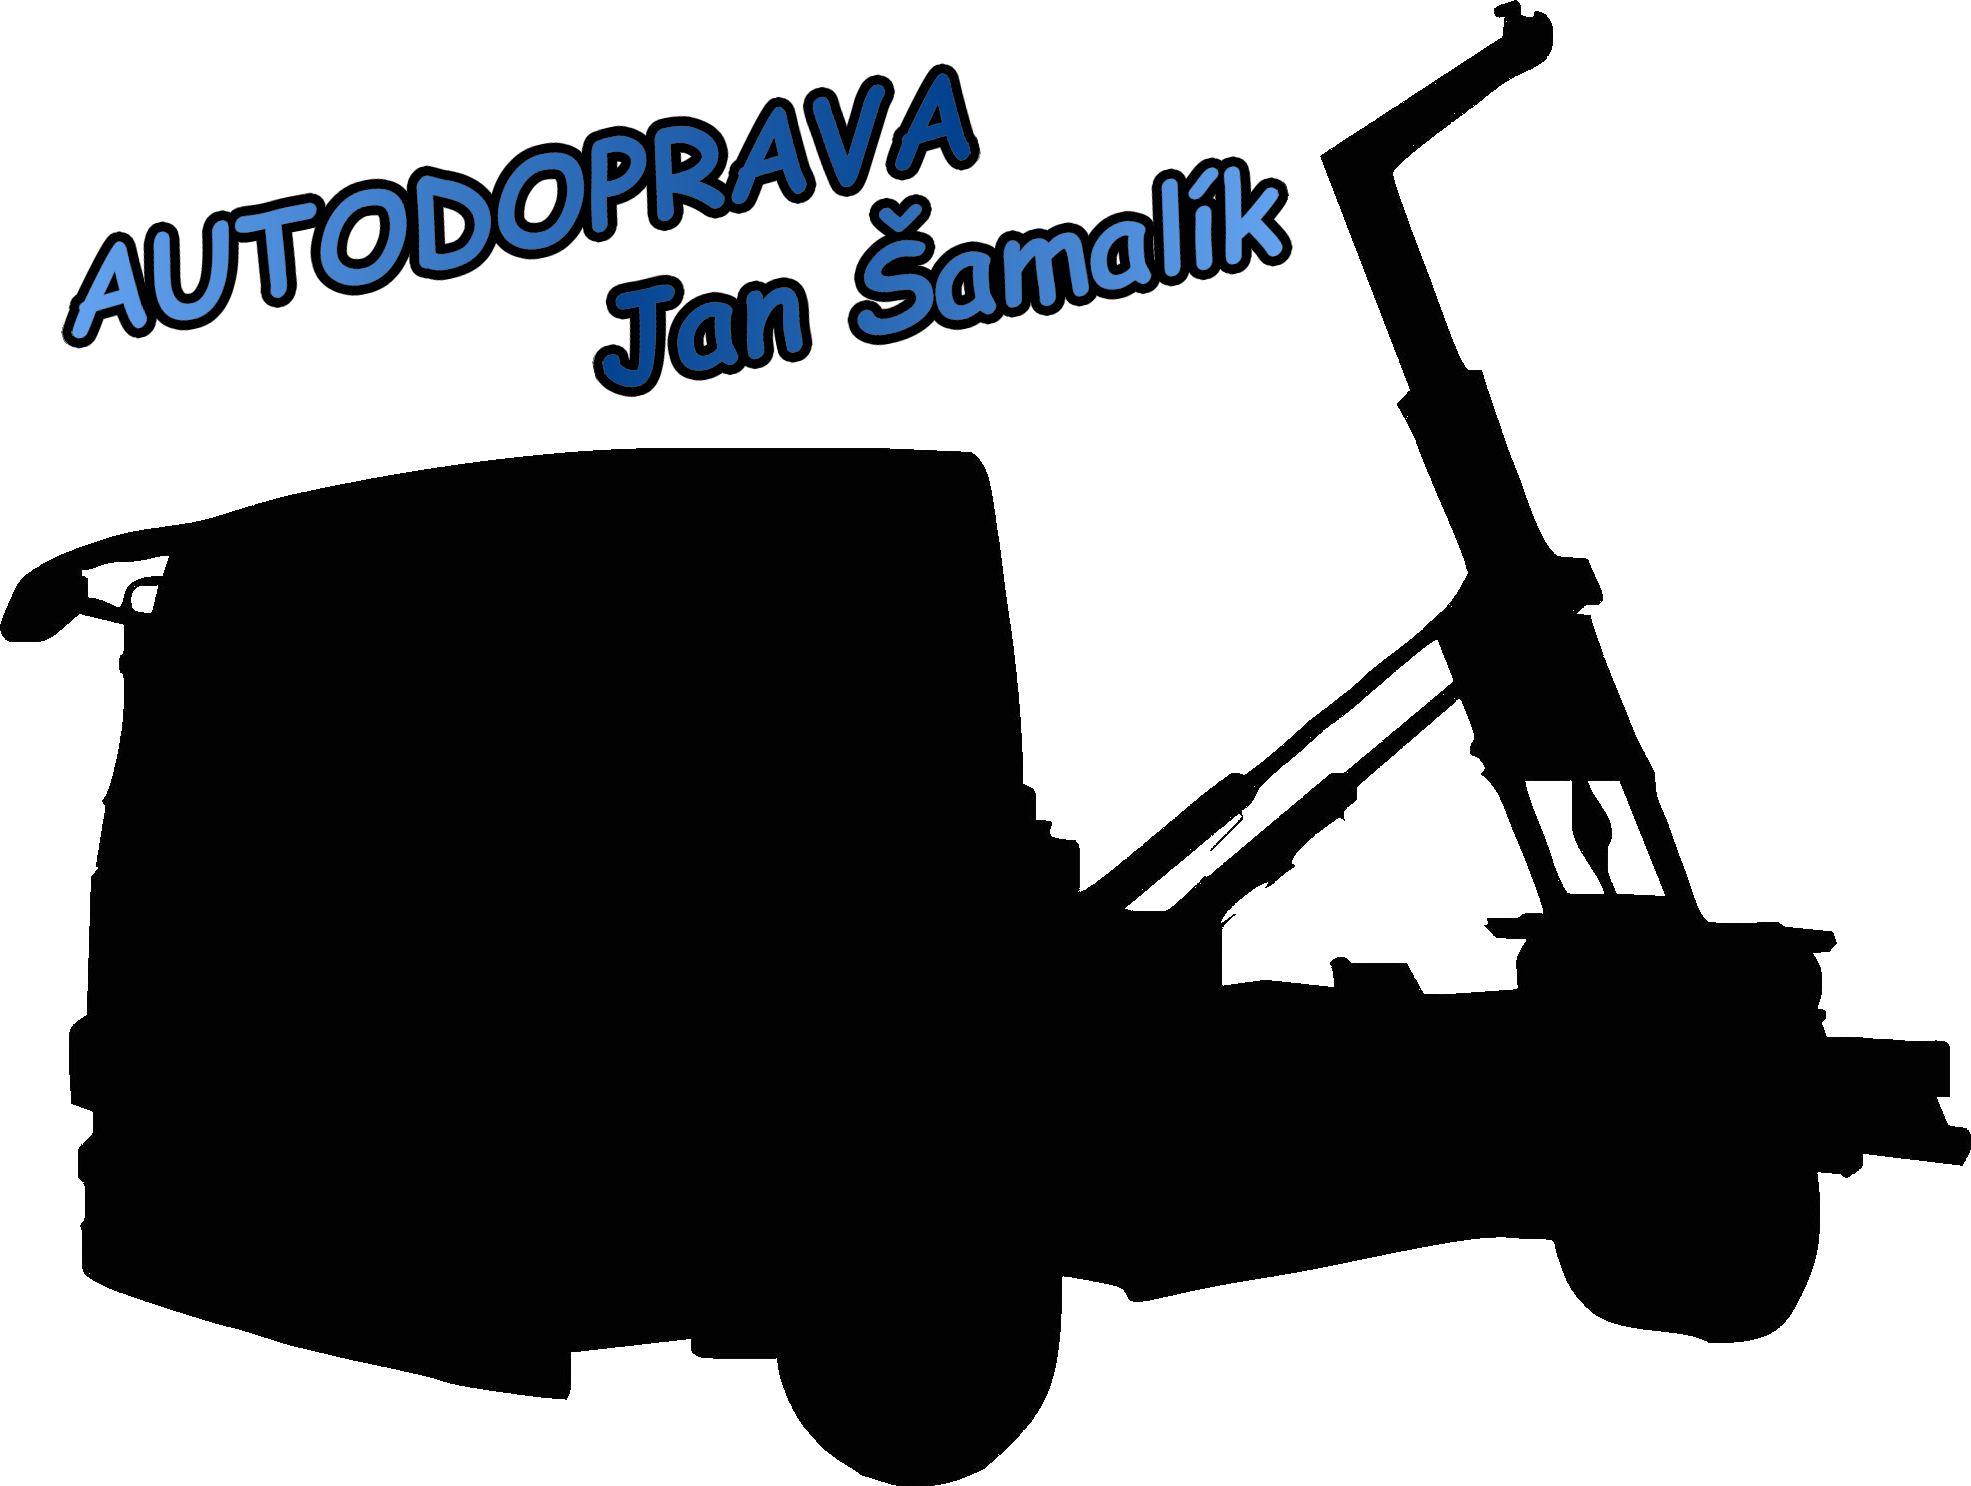  Autodoprava Jan Šamalík